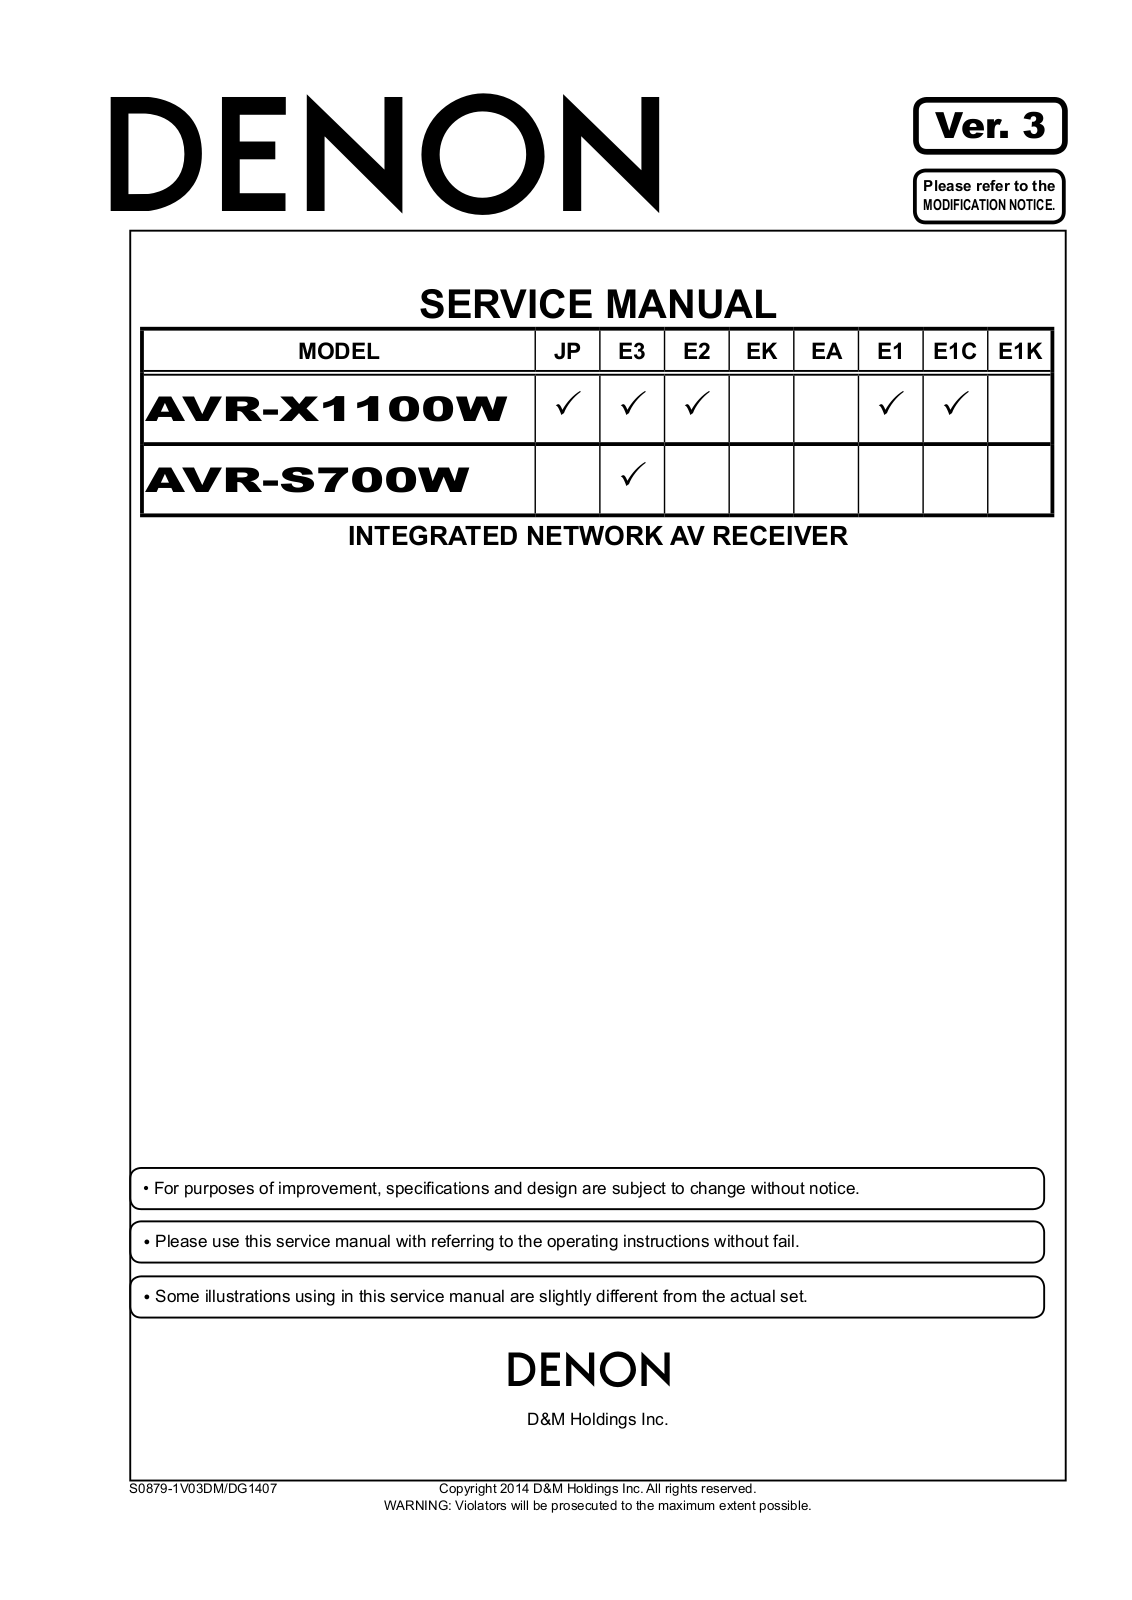 Denon AVR-X1100W, AVR-S700W Service manual